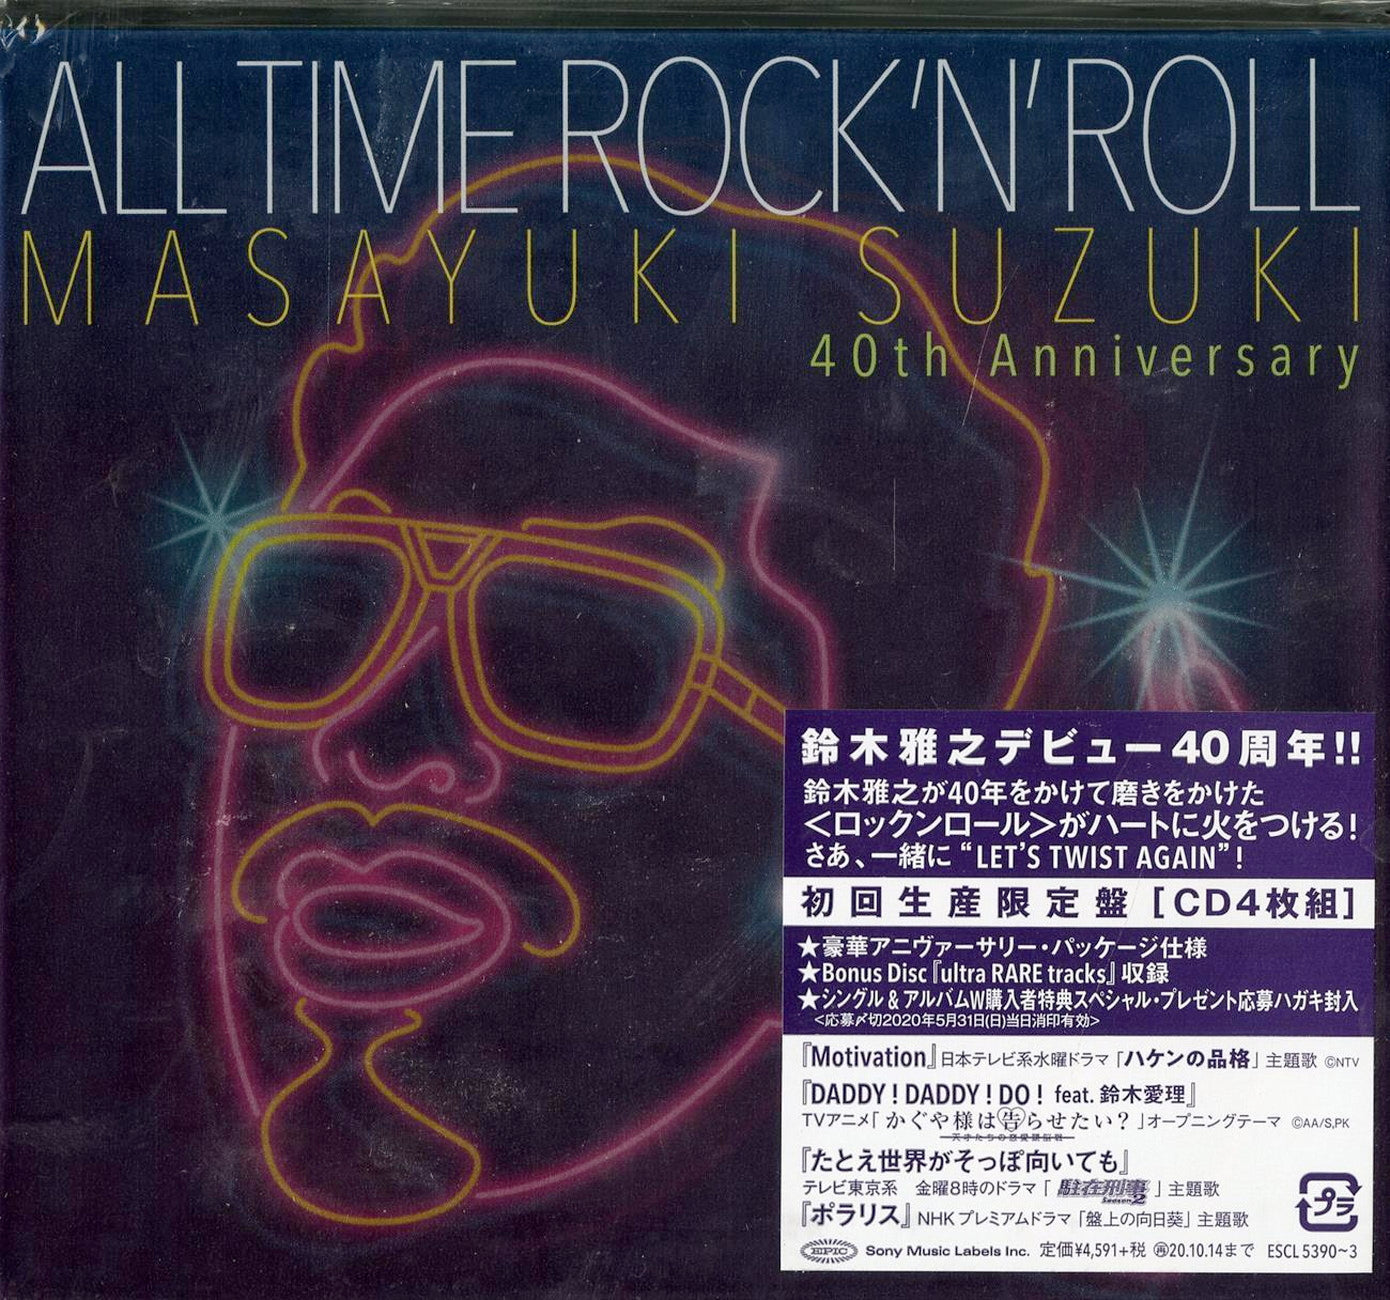 Masayuki Suzuki - All Time Rock 'N' Roll - Japan 4 CD Limited